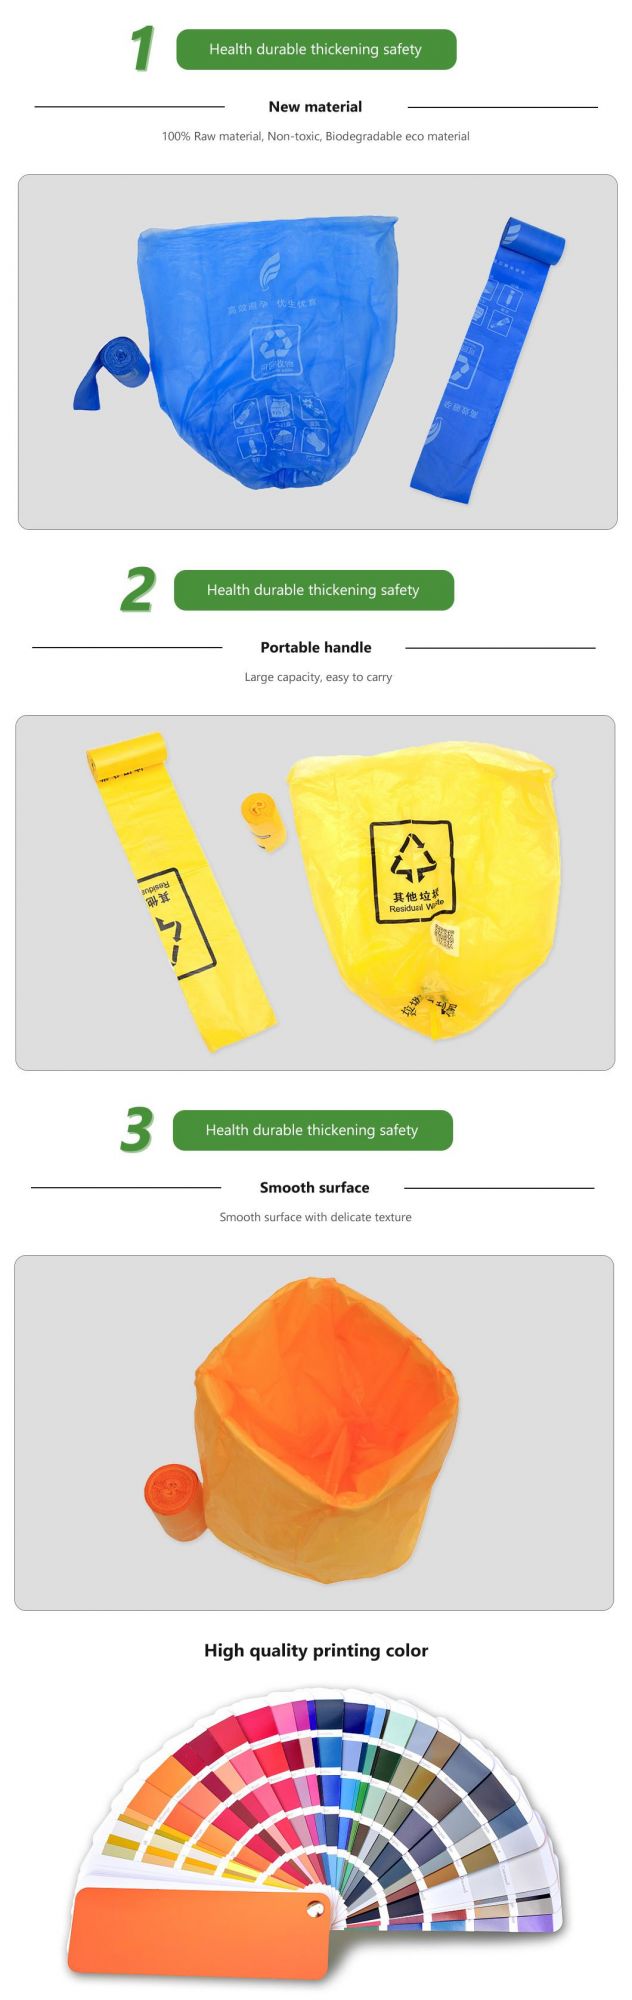 PLA+Pbat/Pbat+Corn Starch Biodegradable Bags, Compostable Bags, Rubbish Bags for Home